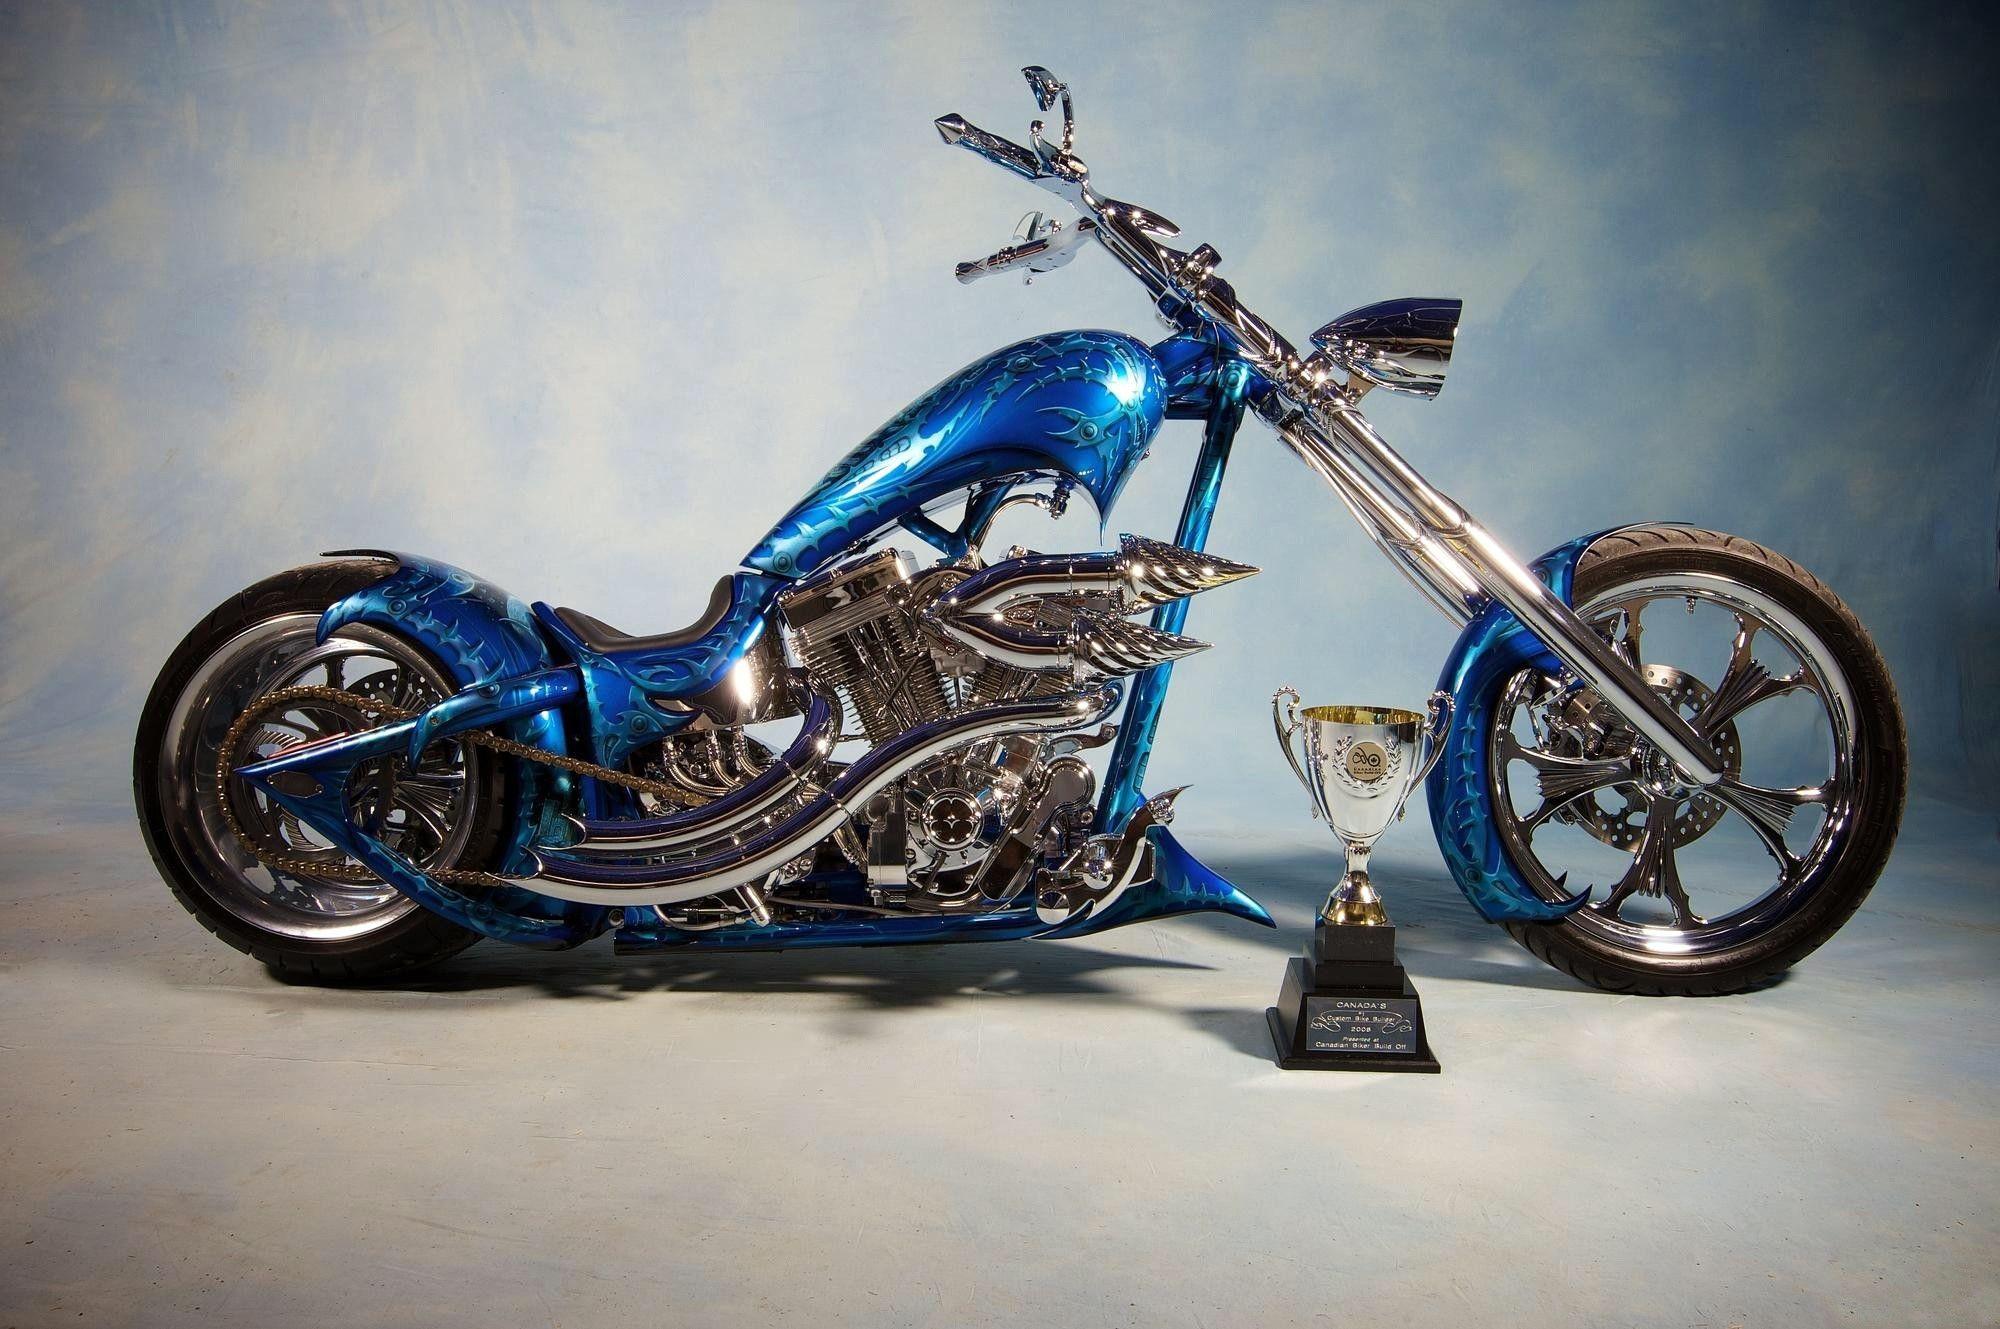 Chopper, Bike, Blue, Airbrush wallpaper and background